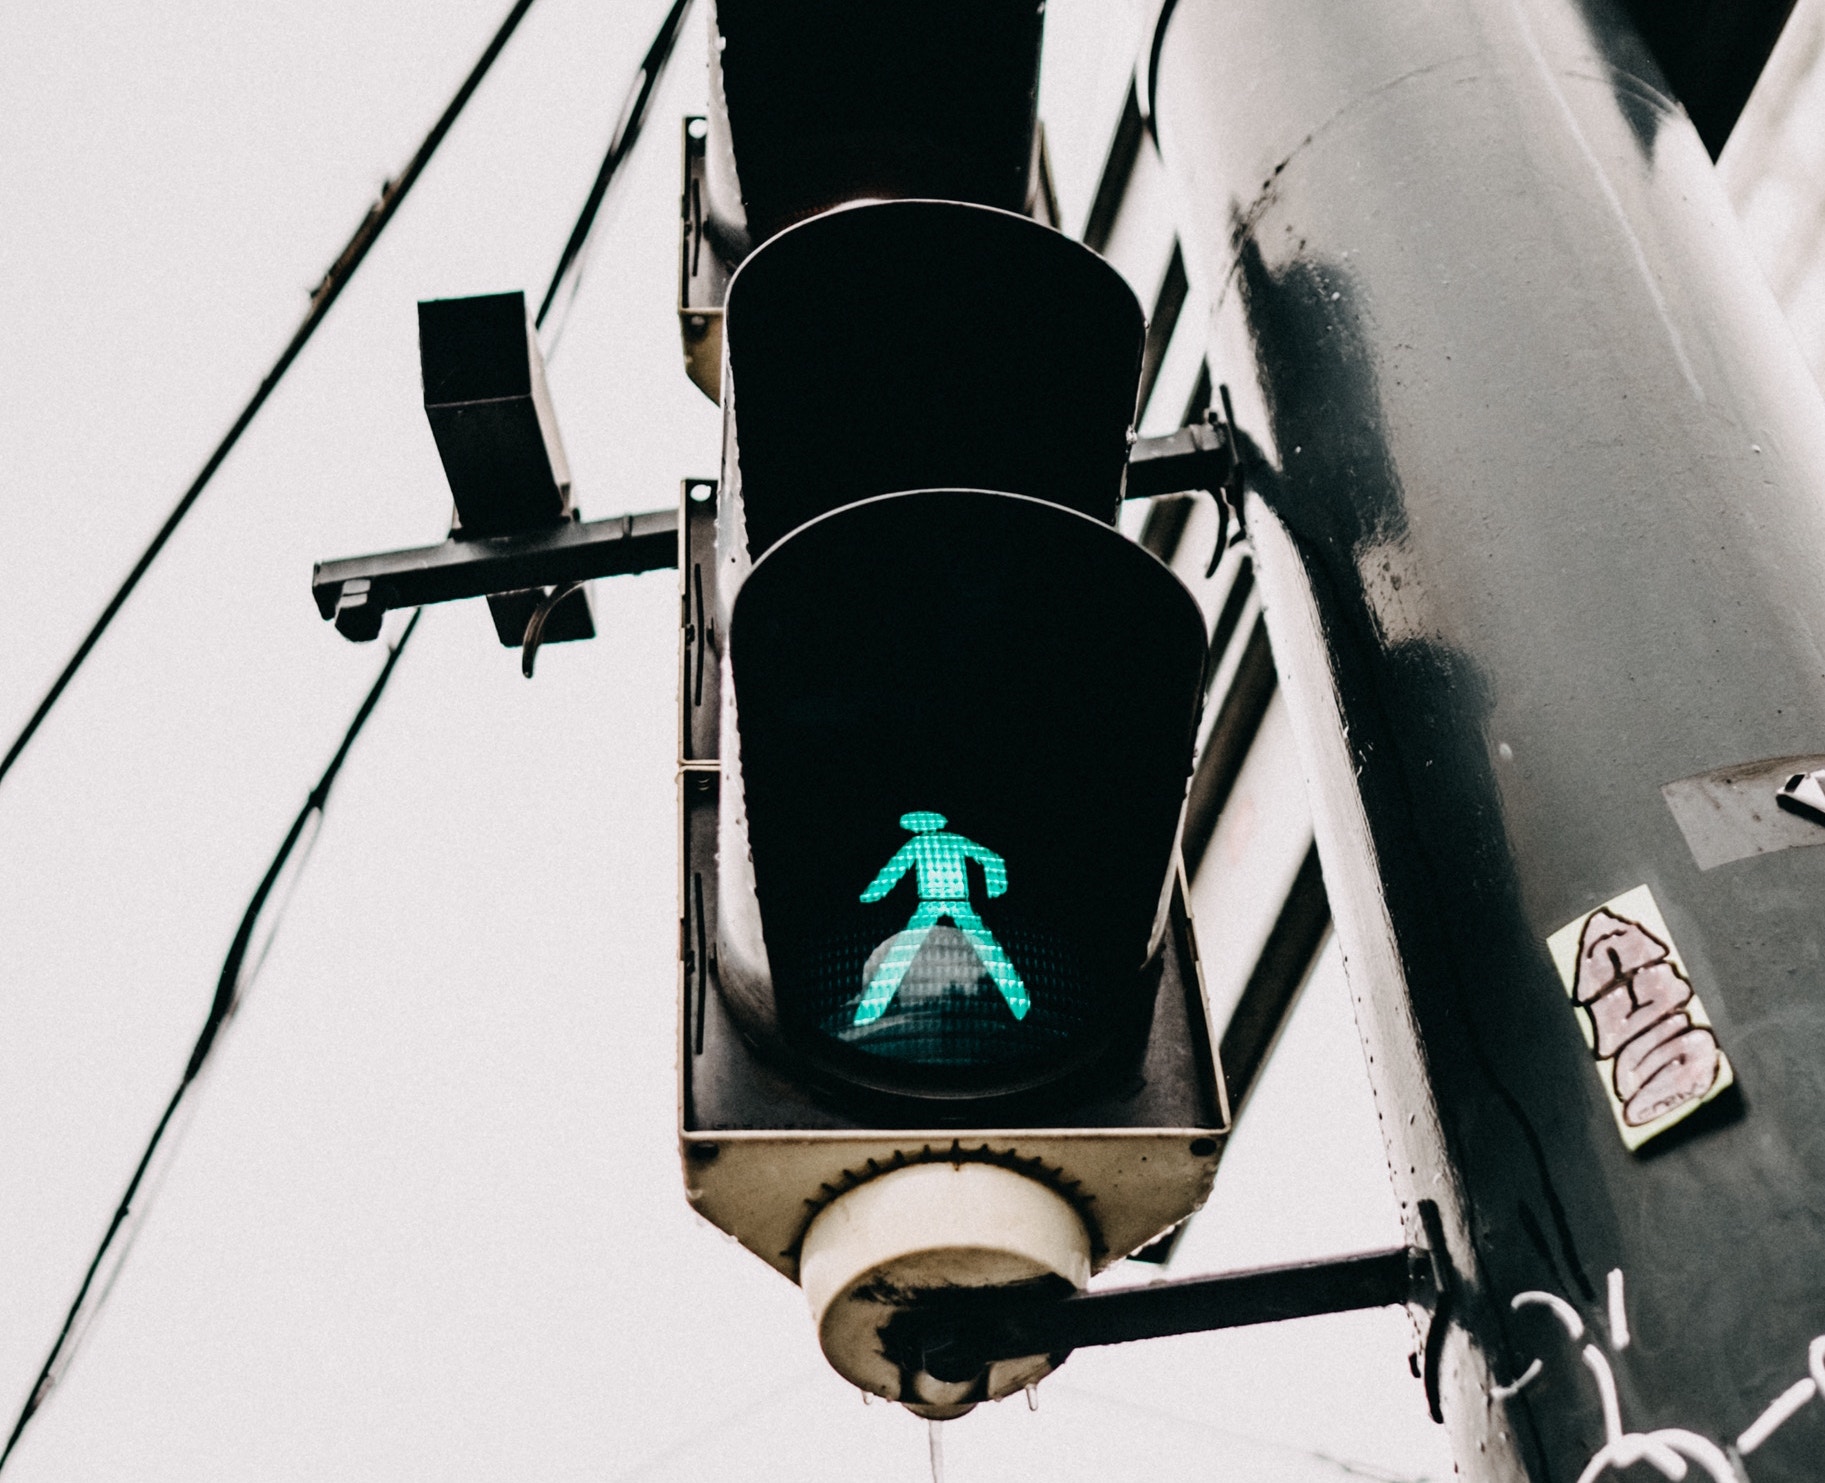 Walk sign traffic light